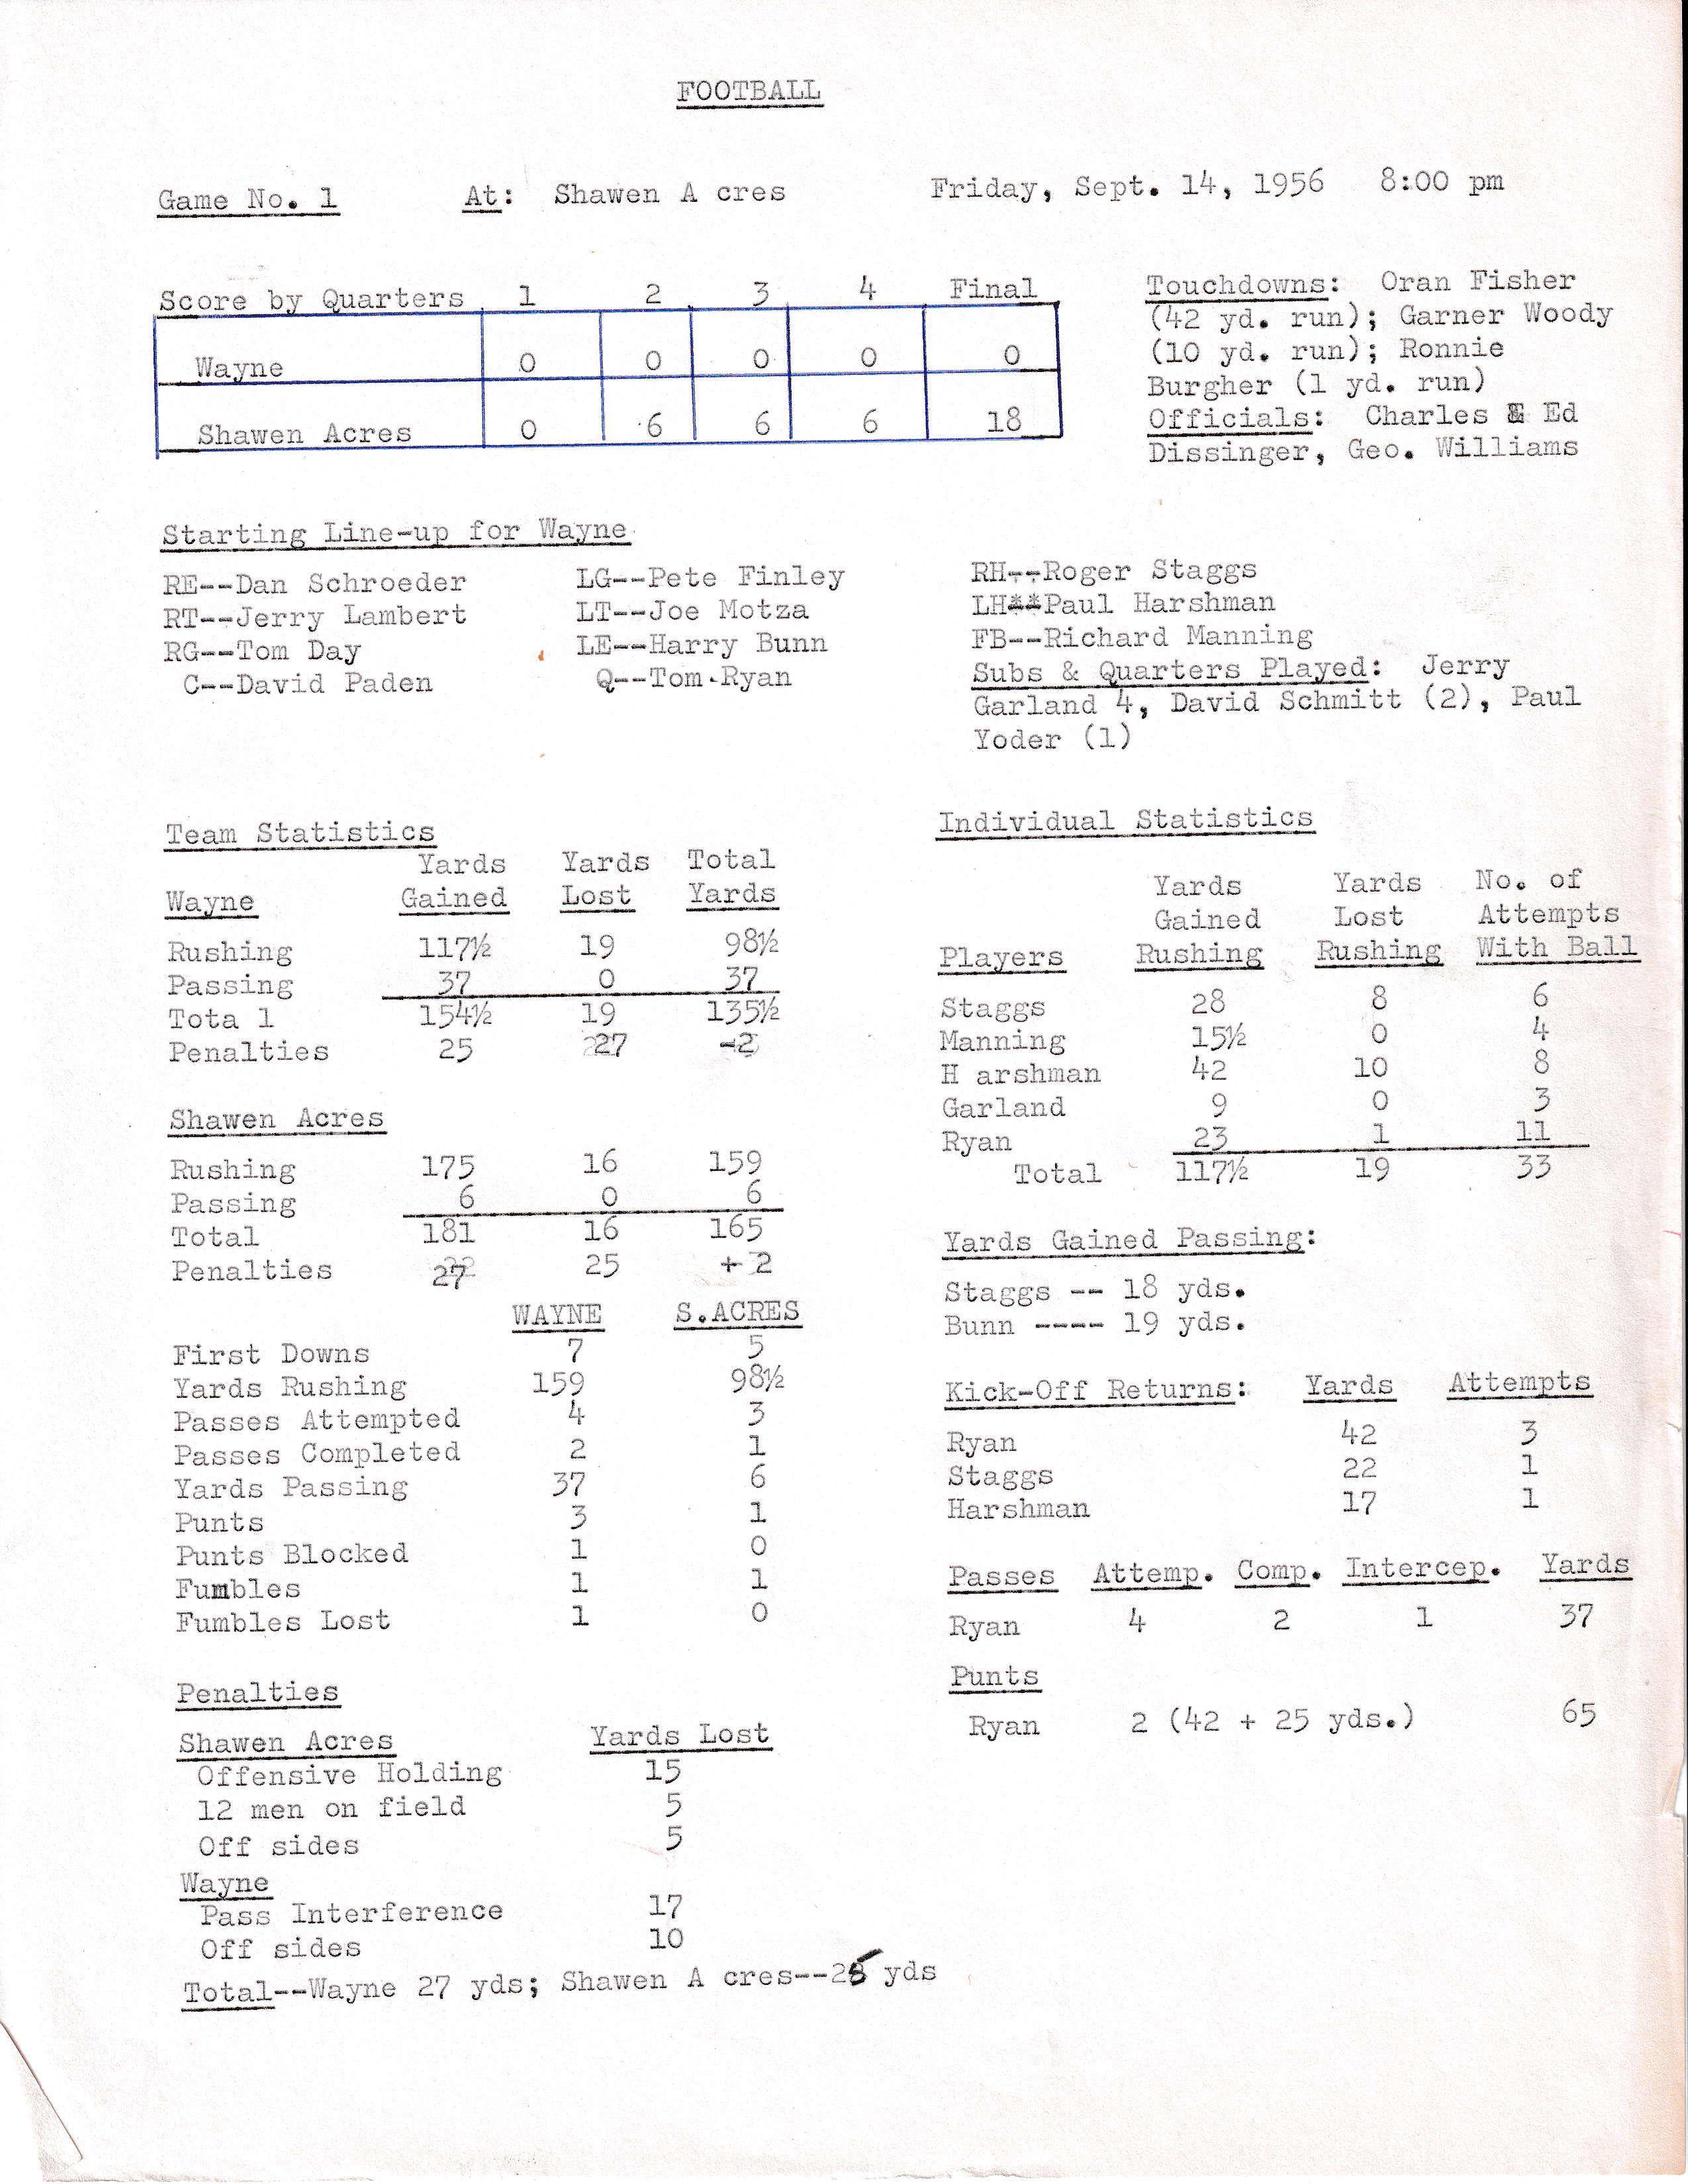 1956 Game 1 vs Shawen Acres